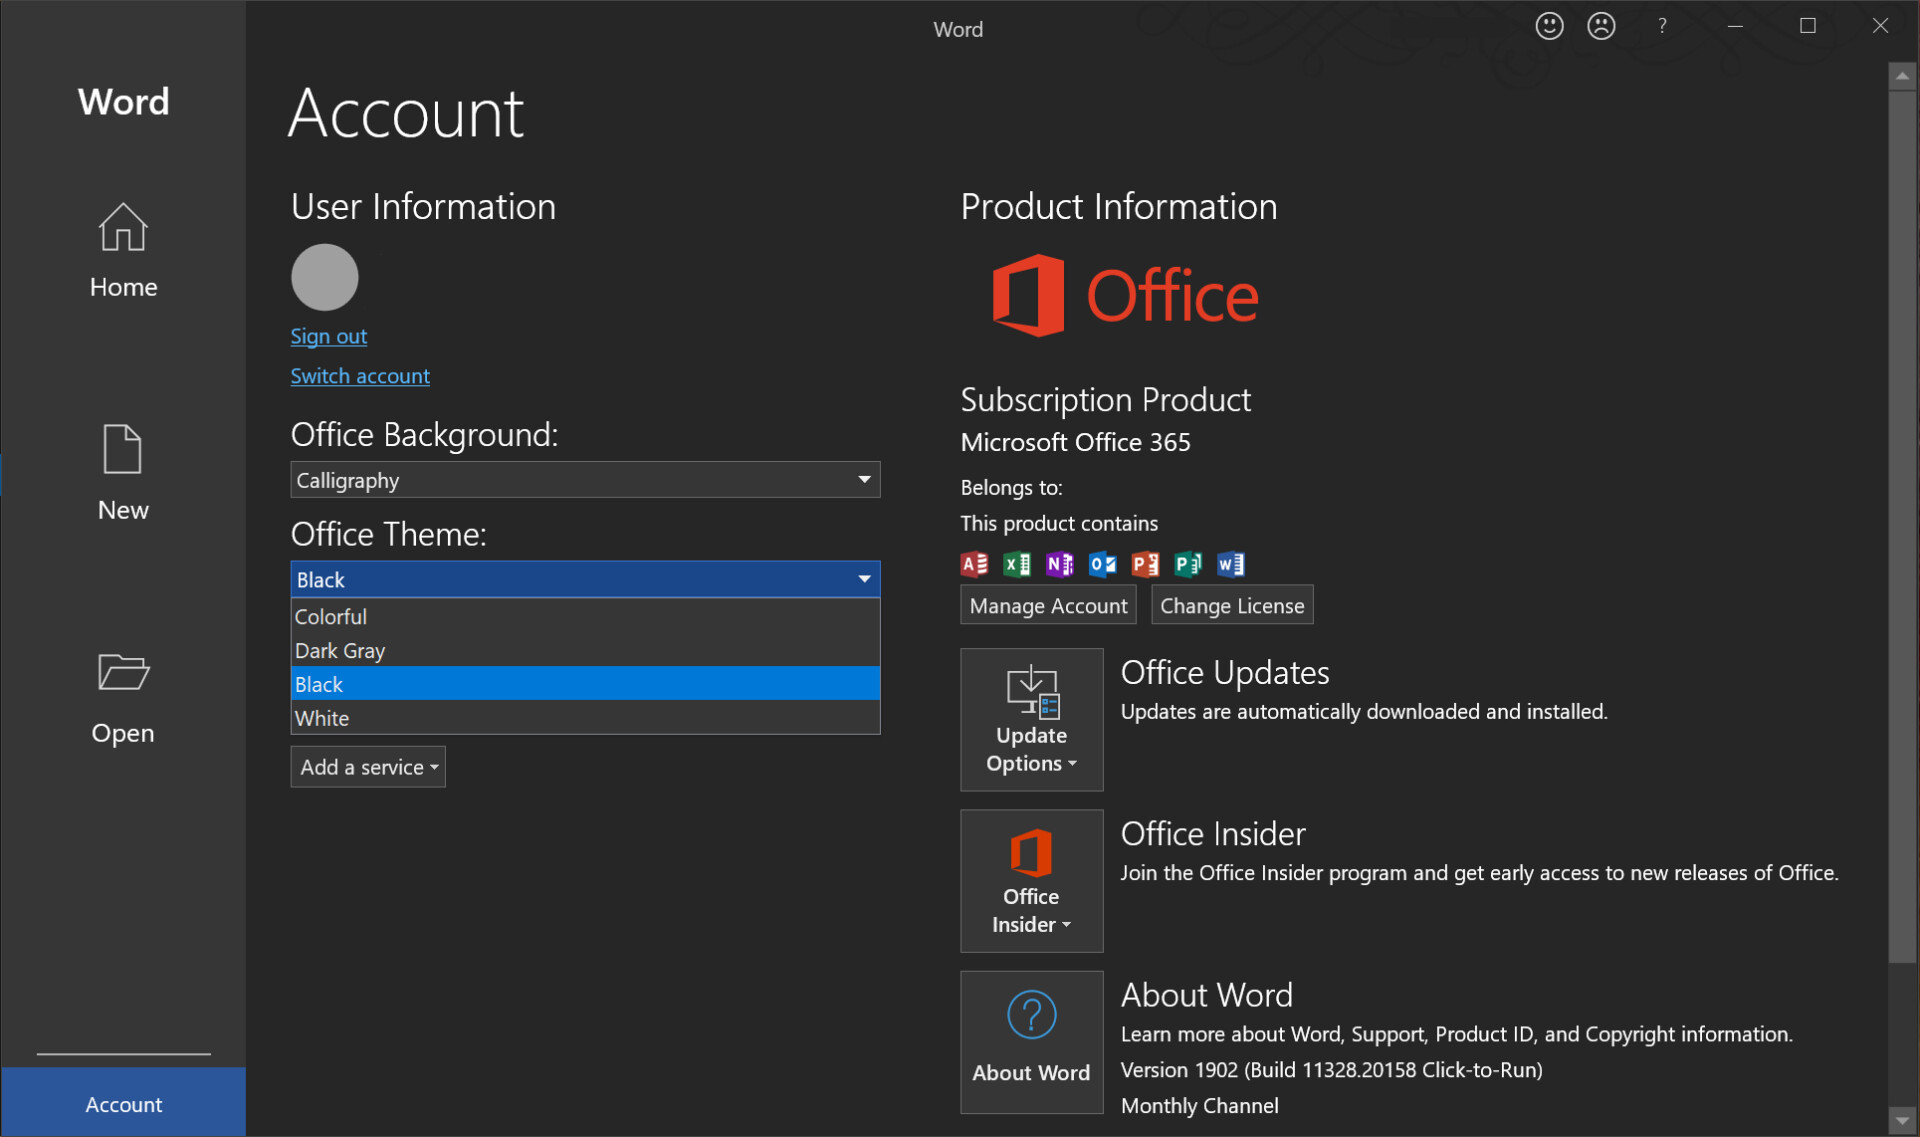 Microsoft Word account settings - How to enable dark mode in Windows 10